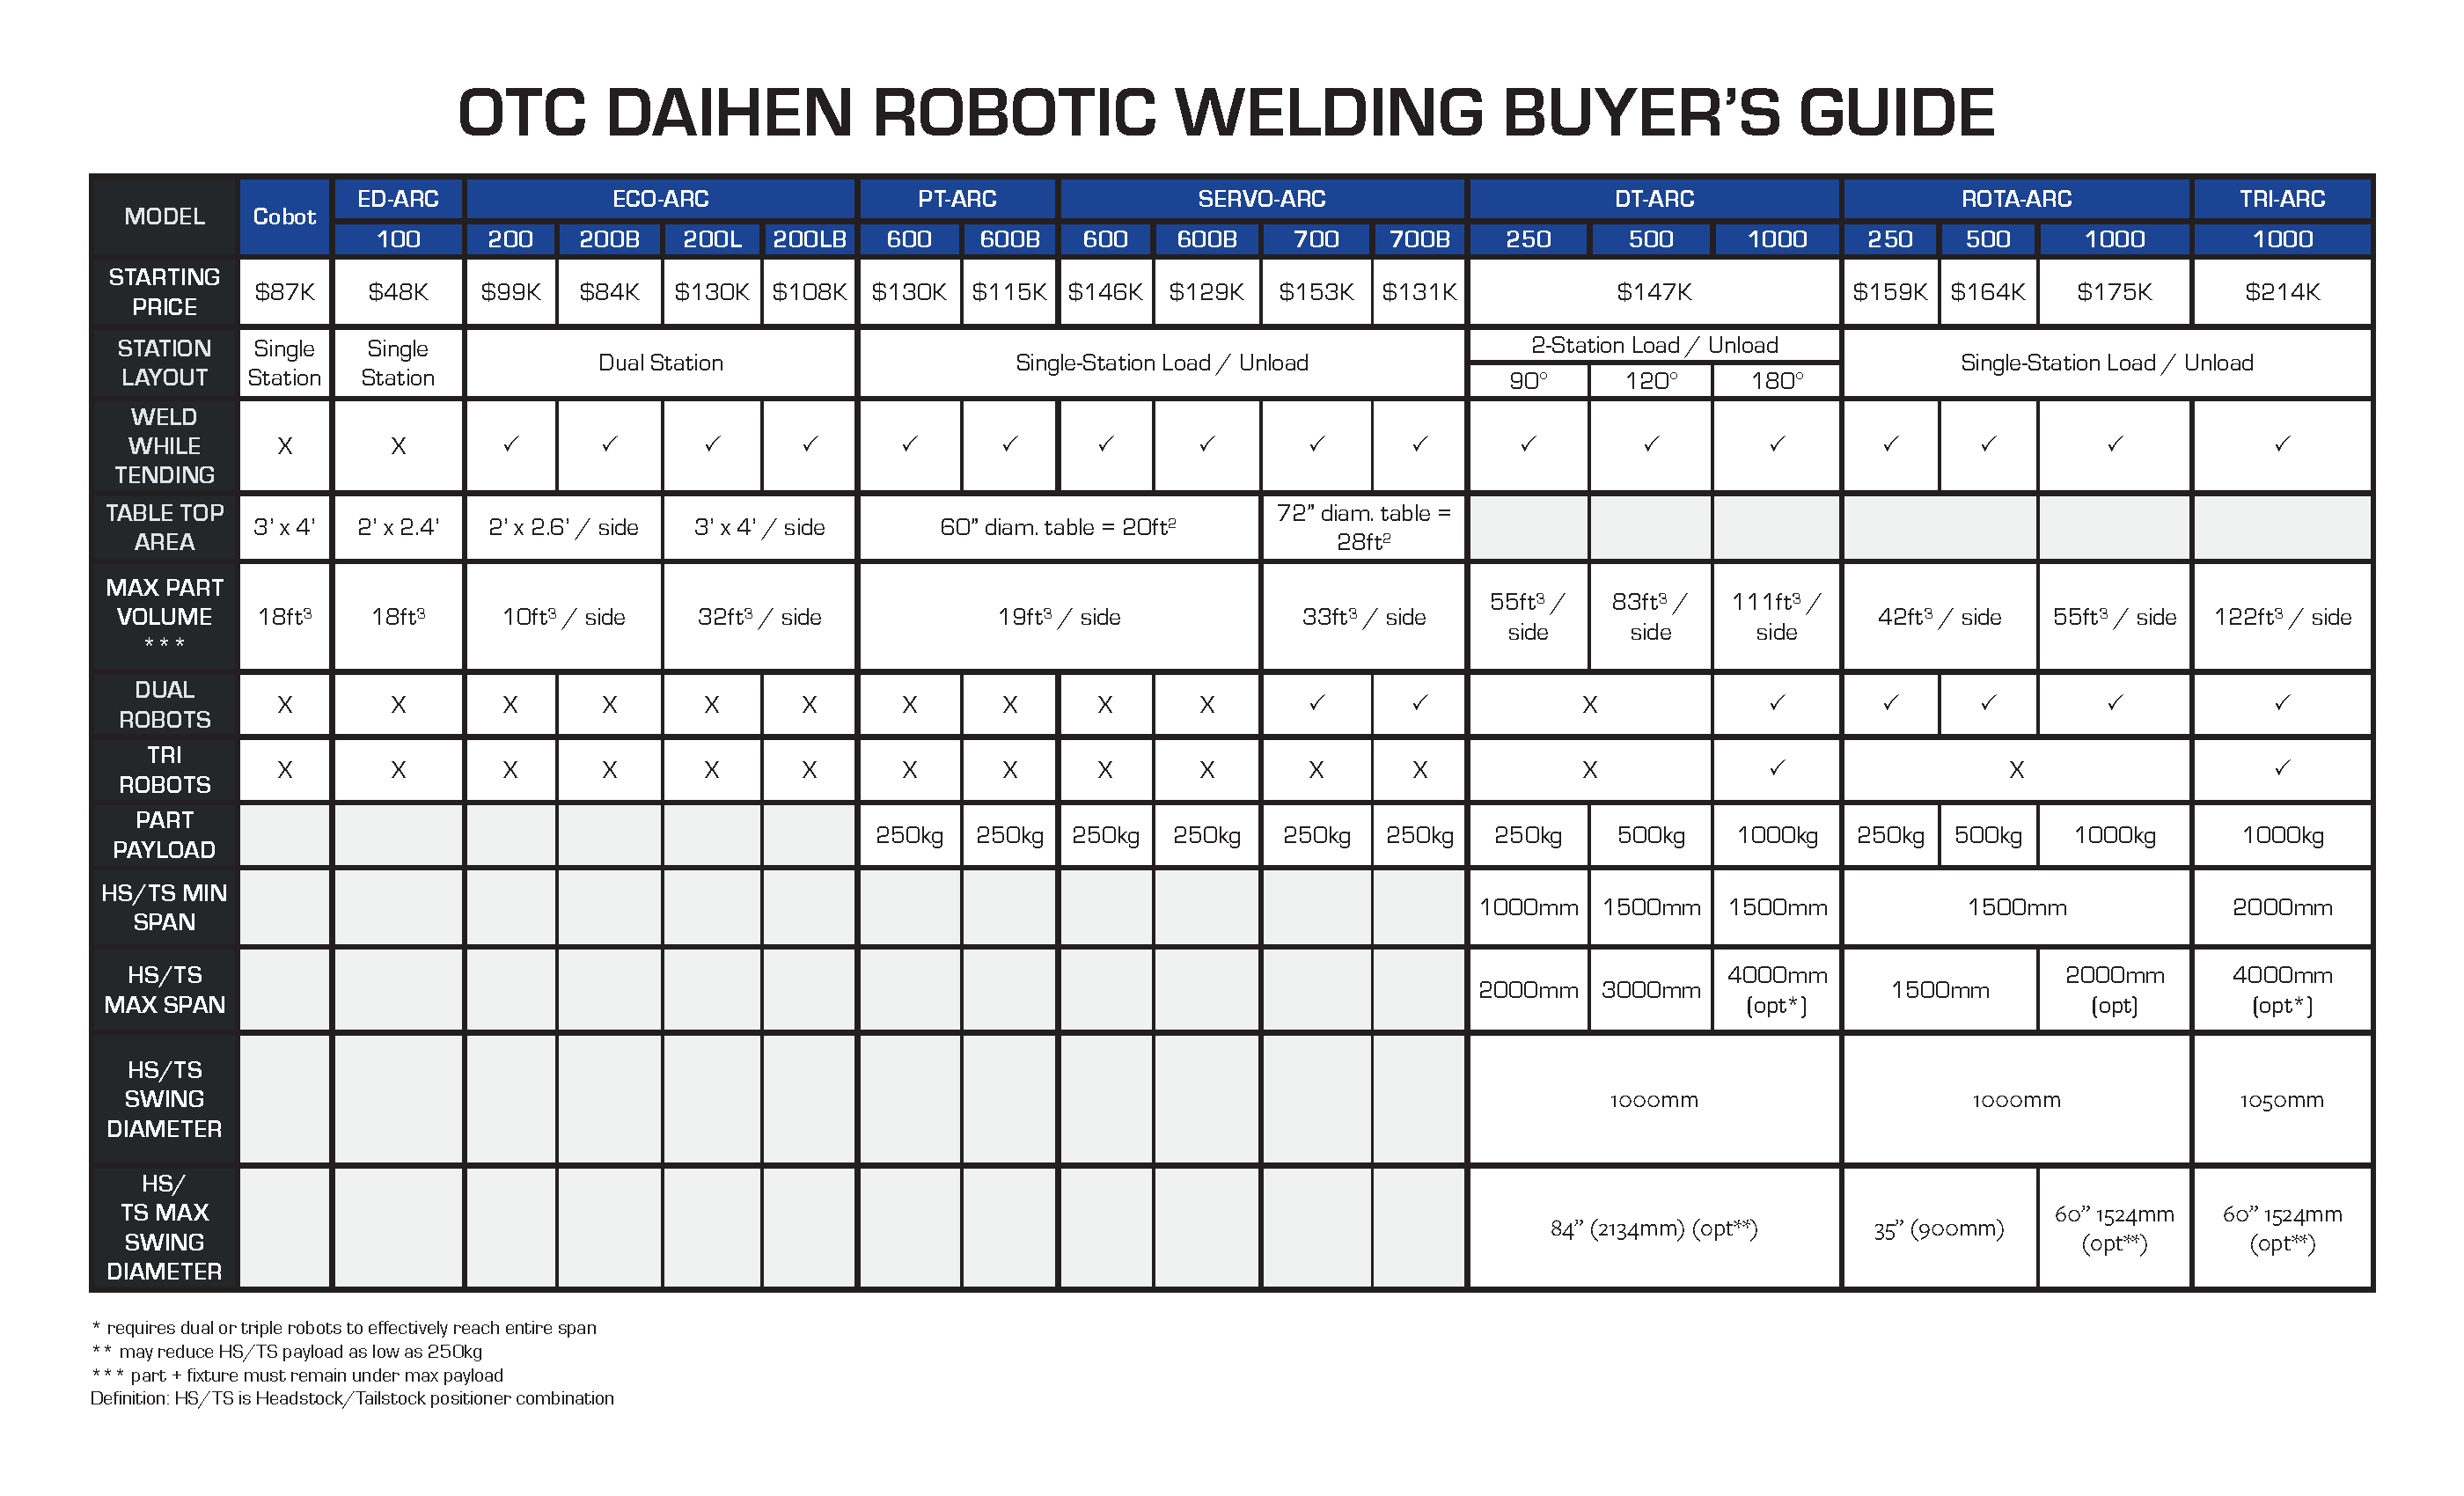 OTC DAIHEN Robotic Welding Systems Comparison Chart